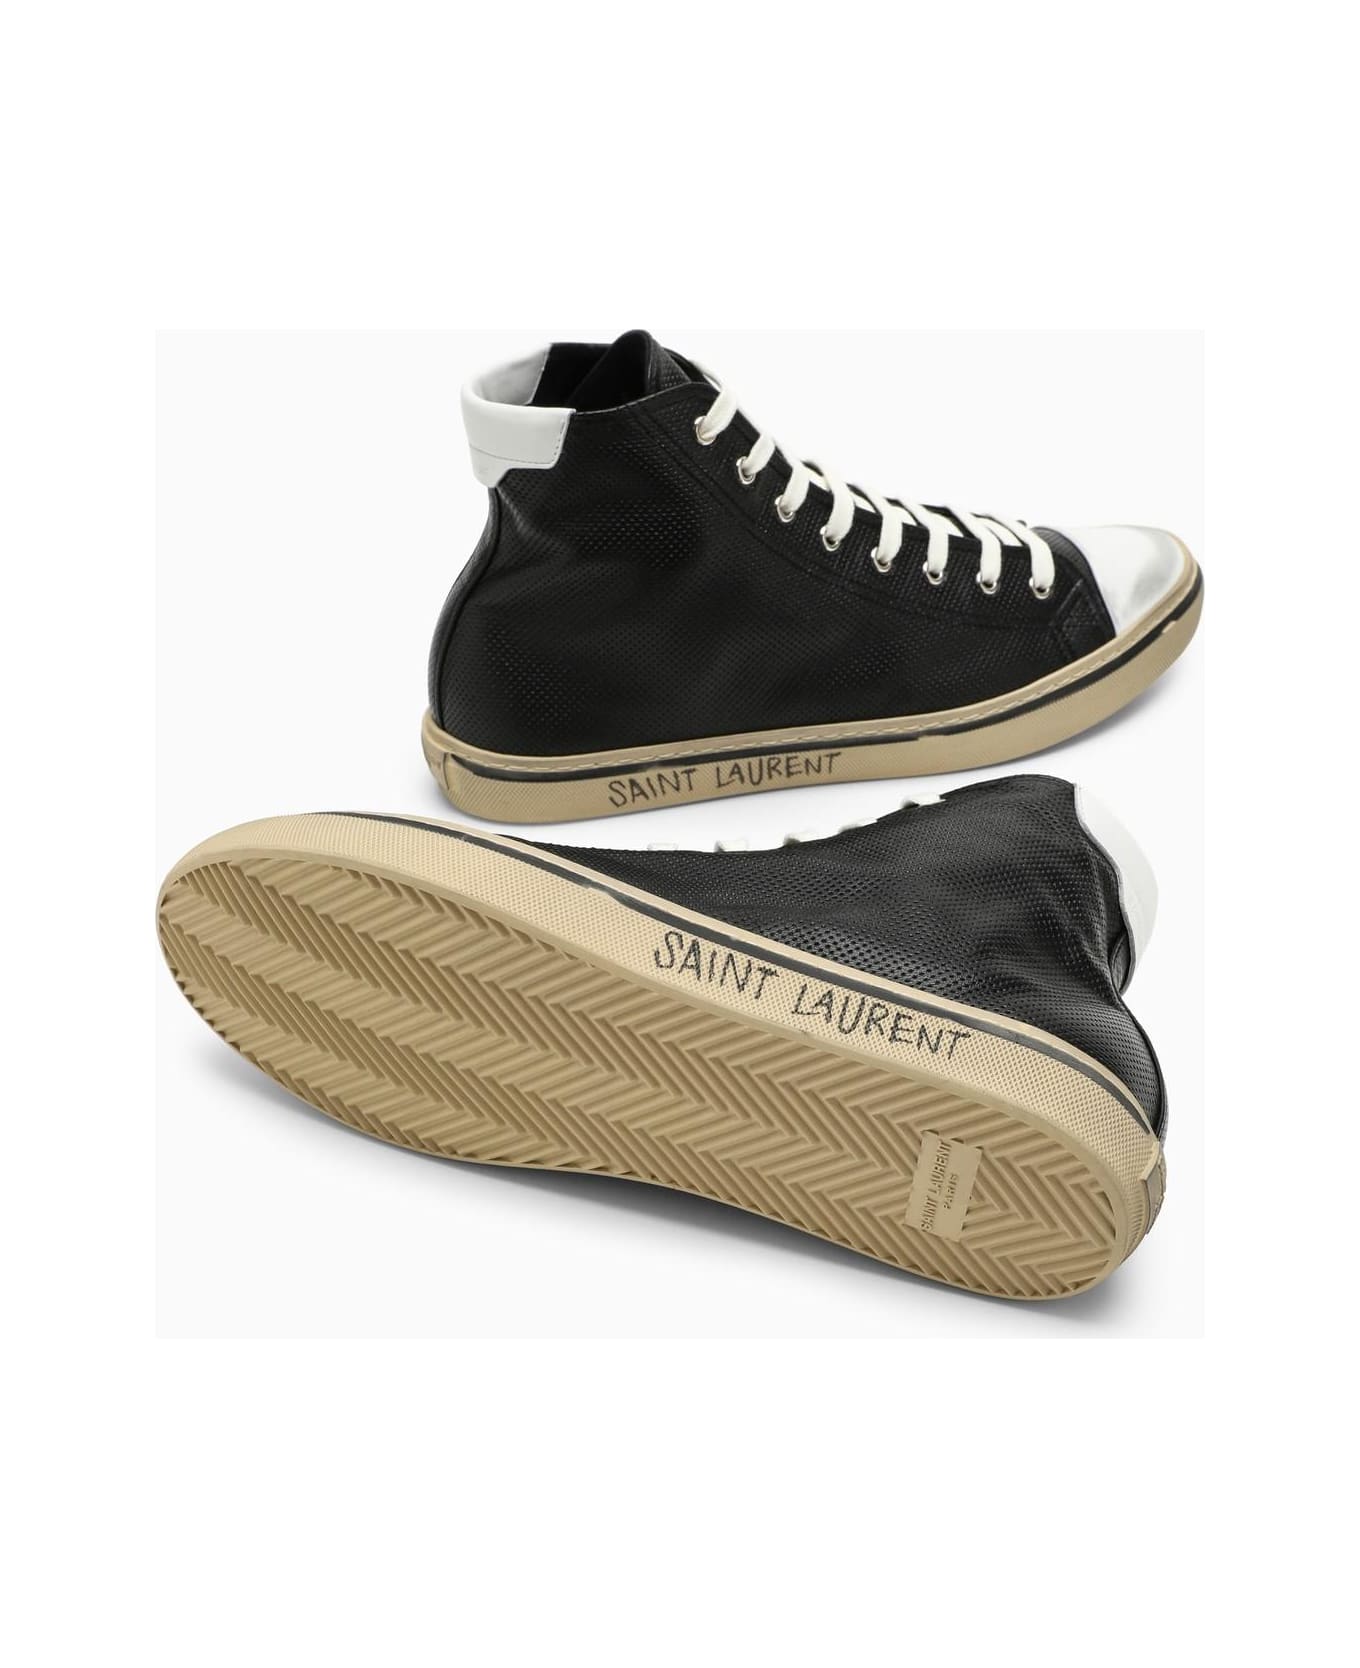 Saint Laurent Malibu Sneakers - Black スニーカー